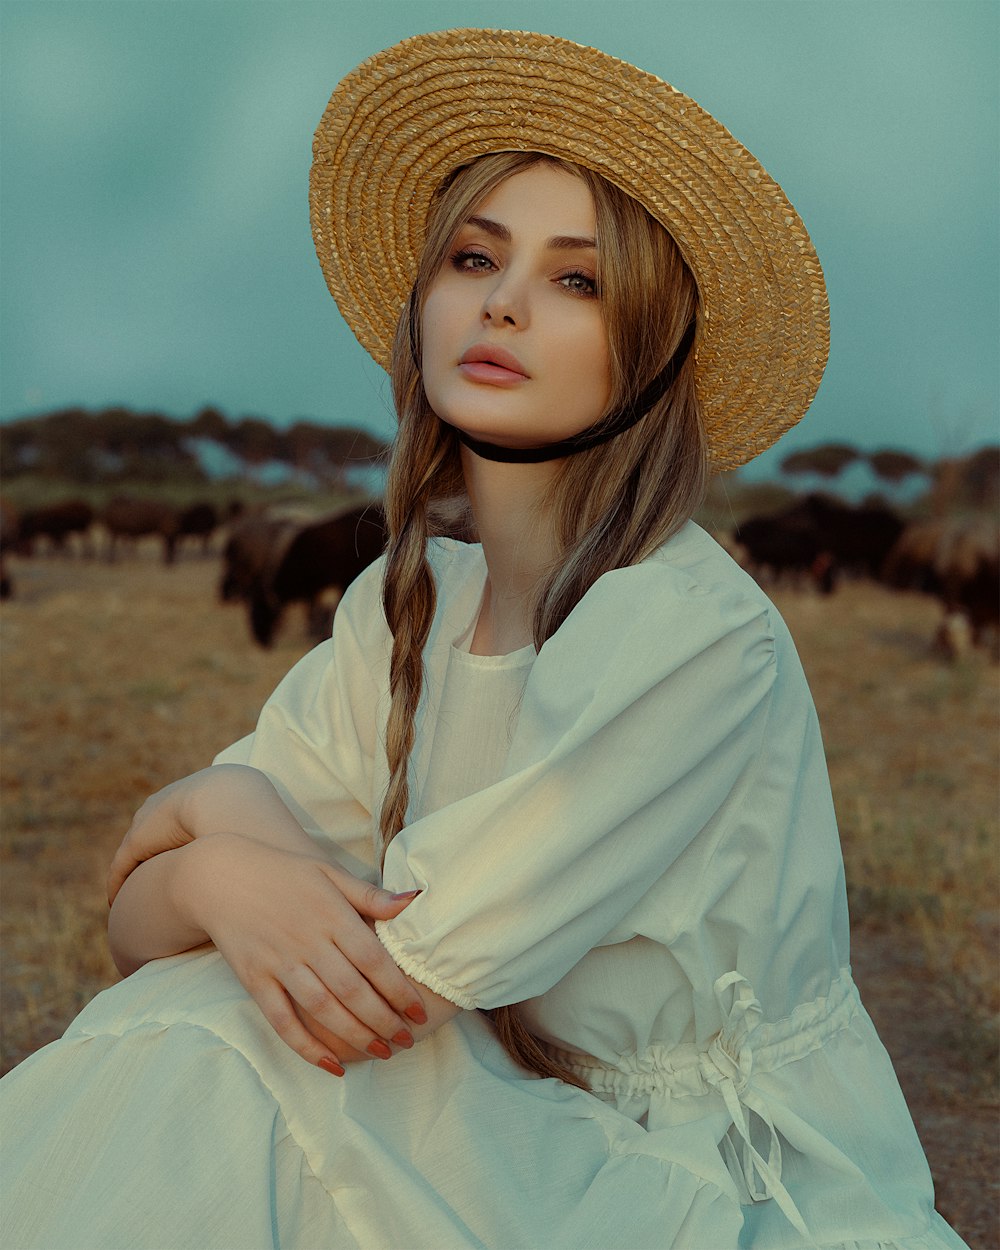 a woman in a straw hat sitting in a field